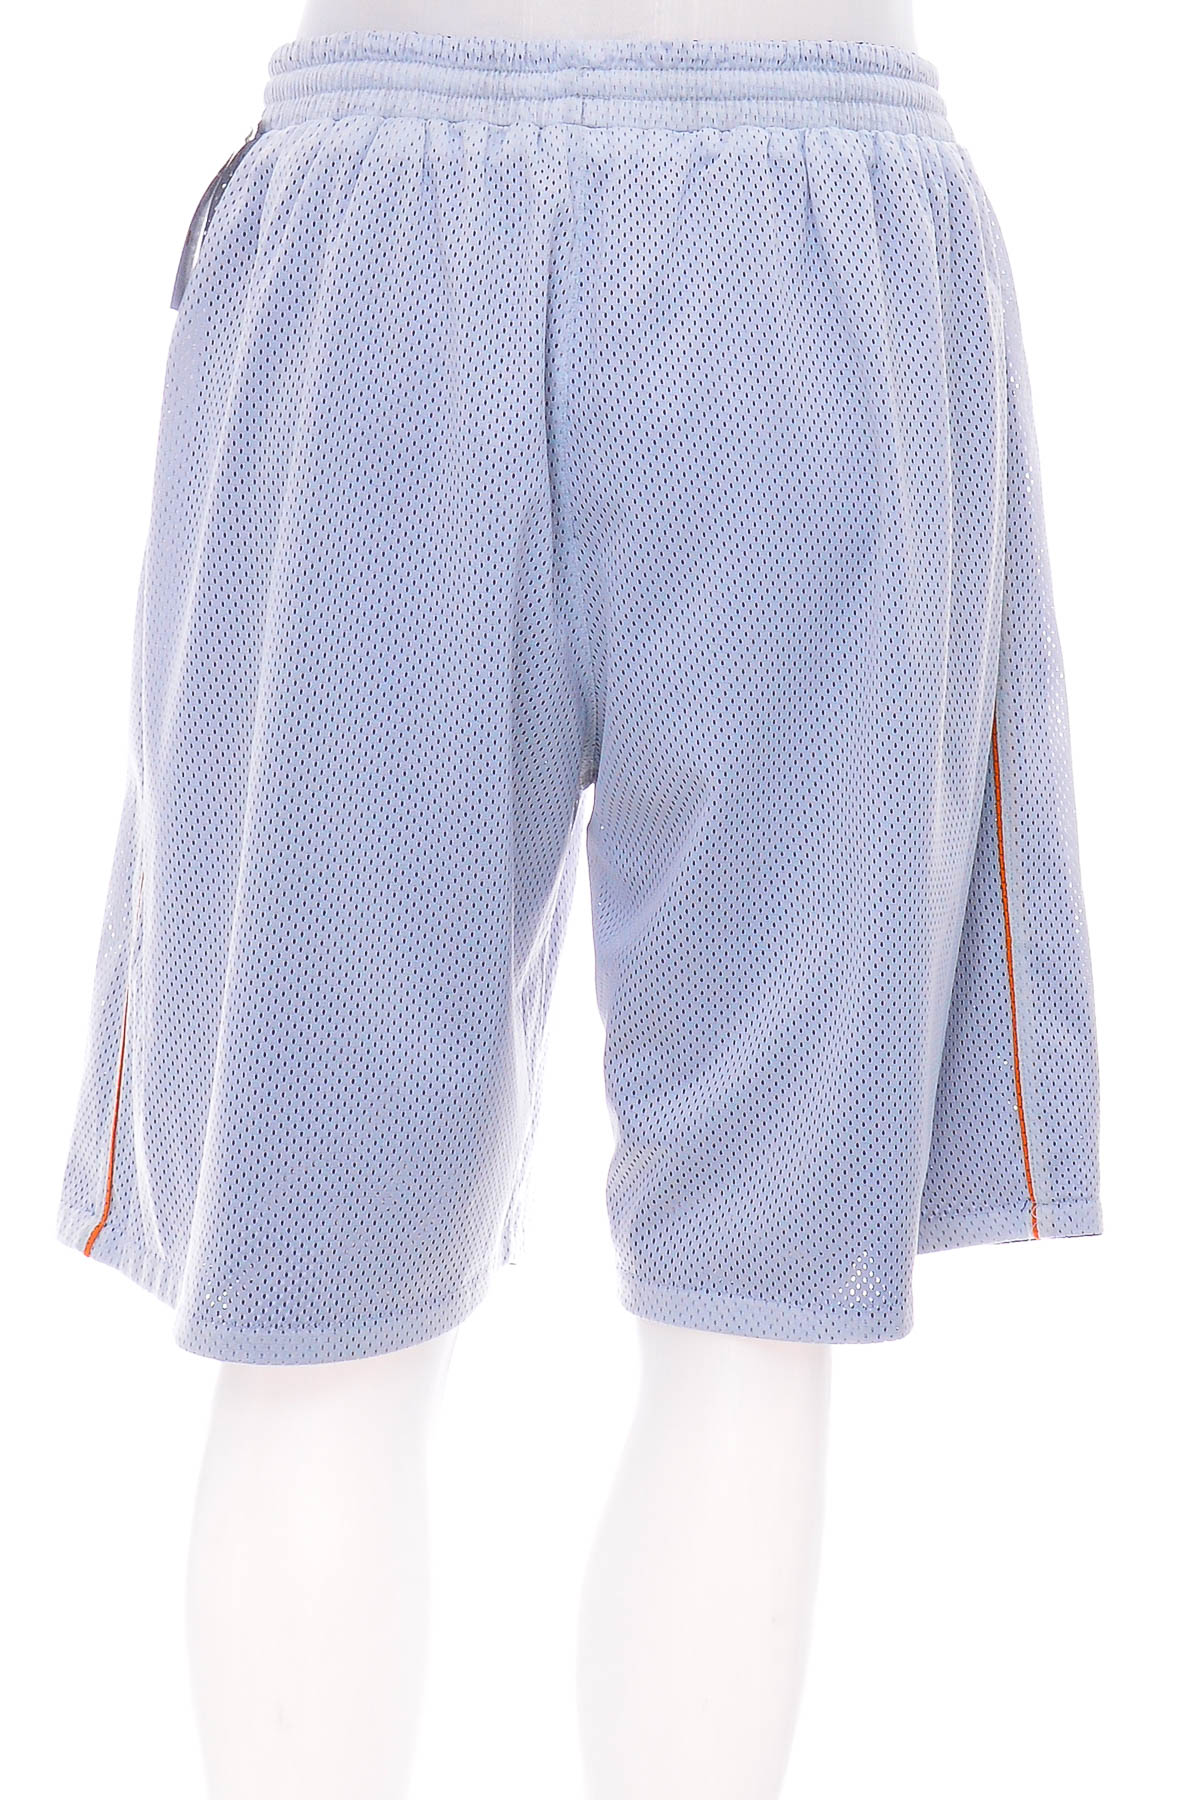 Men's shorts reversibleи - Spalding - 3